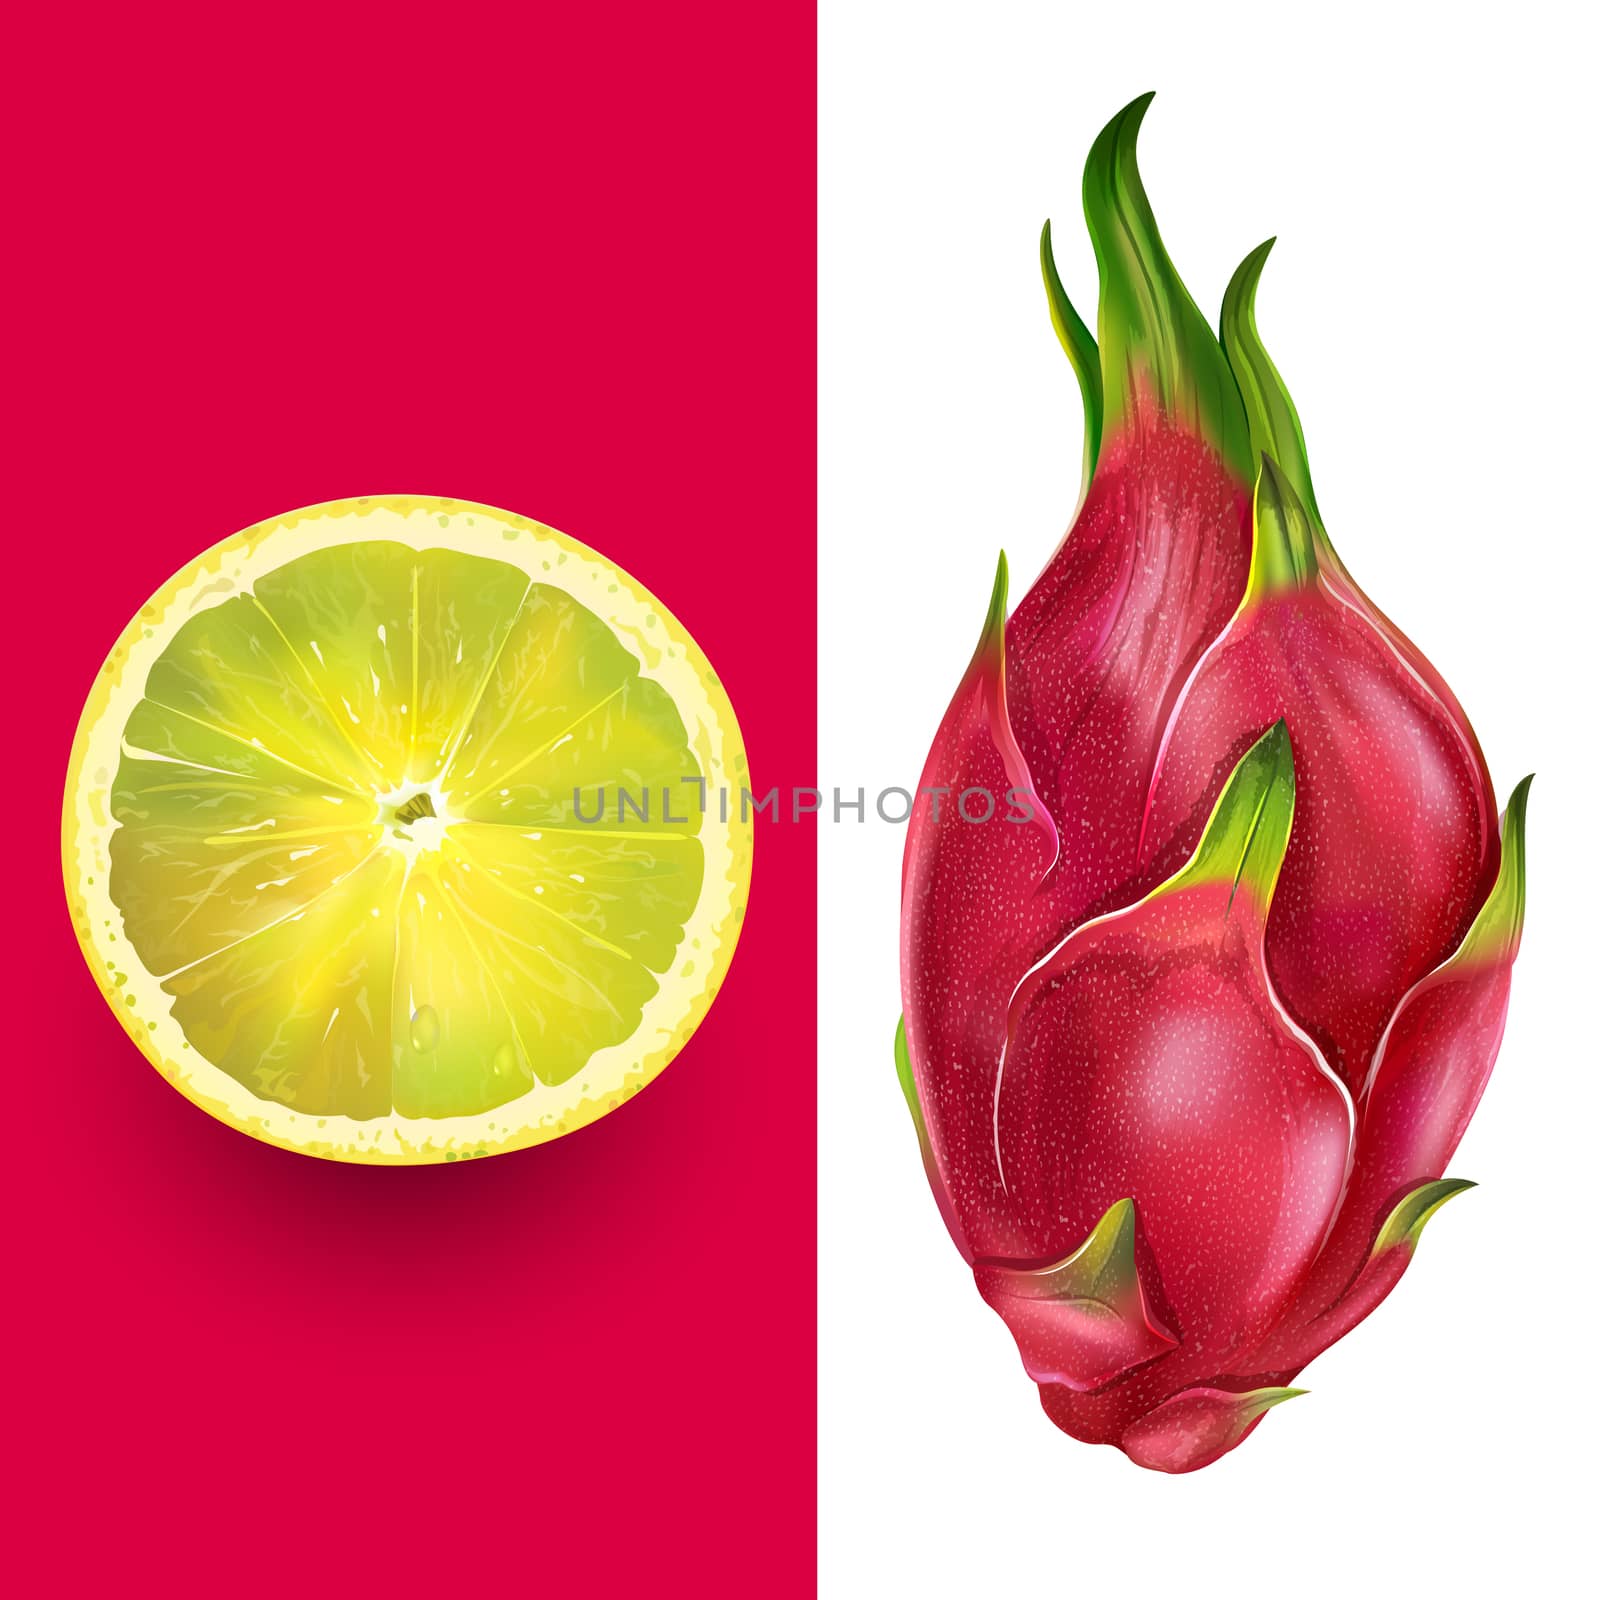 Dragon fruit and lemon illustration by ConceptCafe